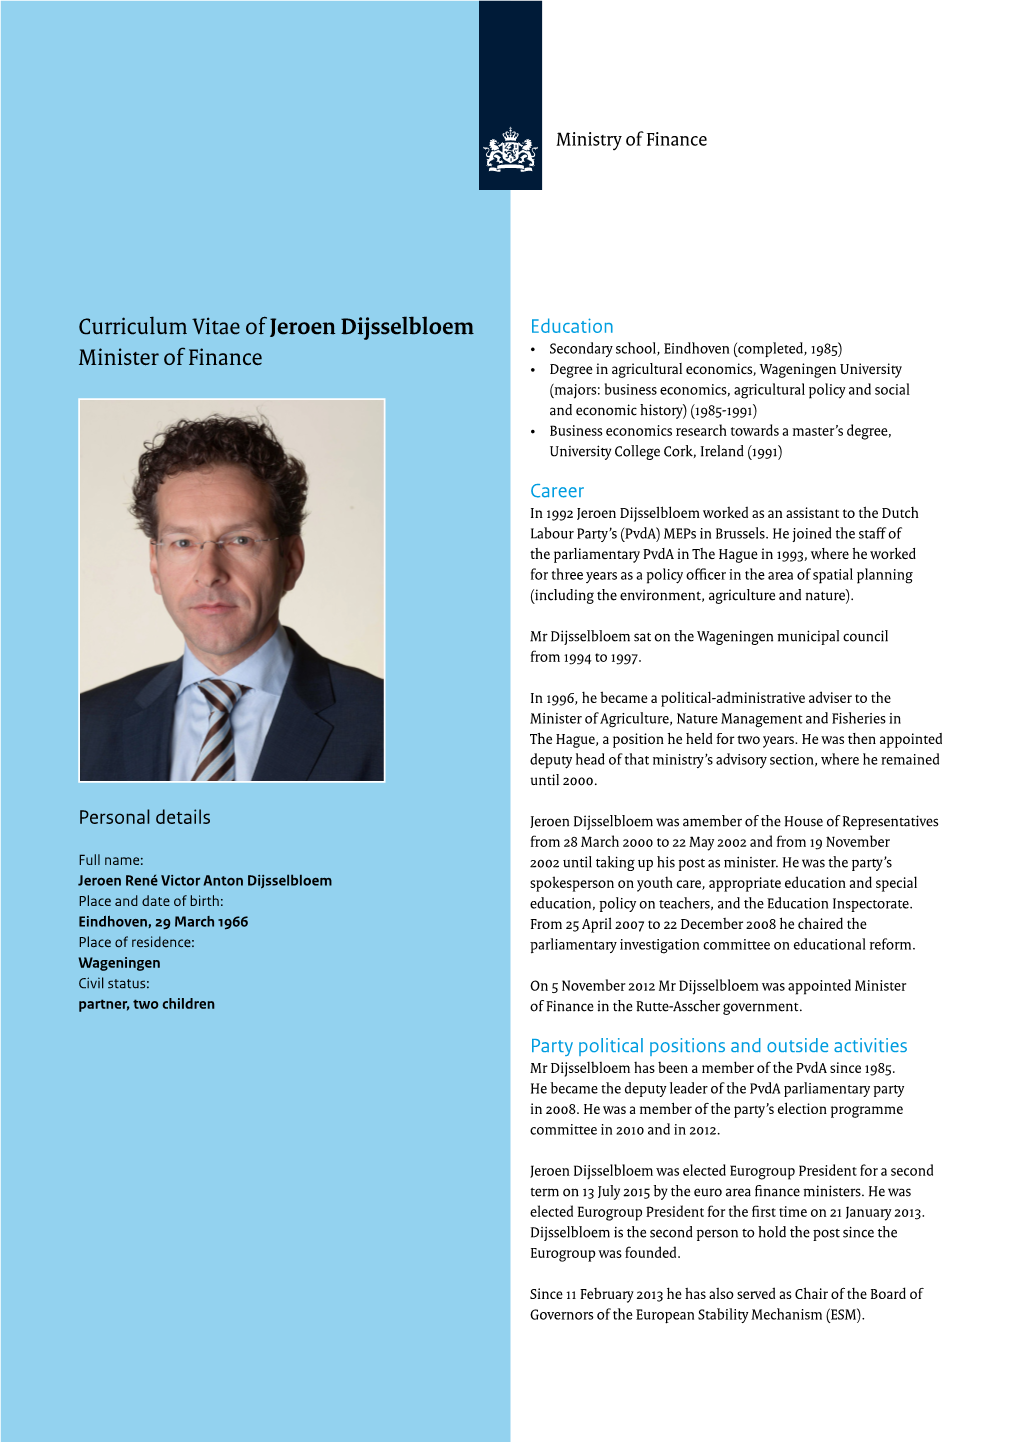 Curriculum Vitae of Jeroen Dijsselbloem Minister of Finance